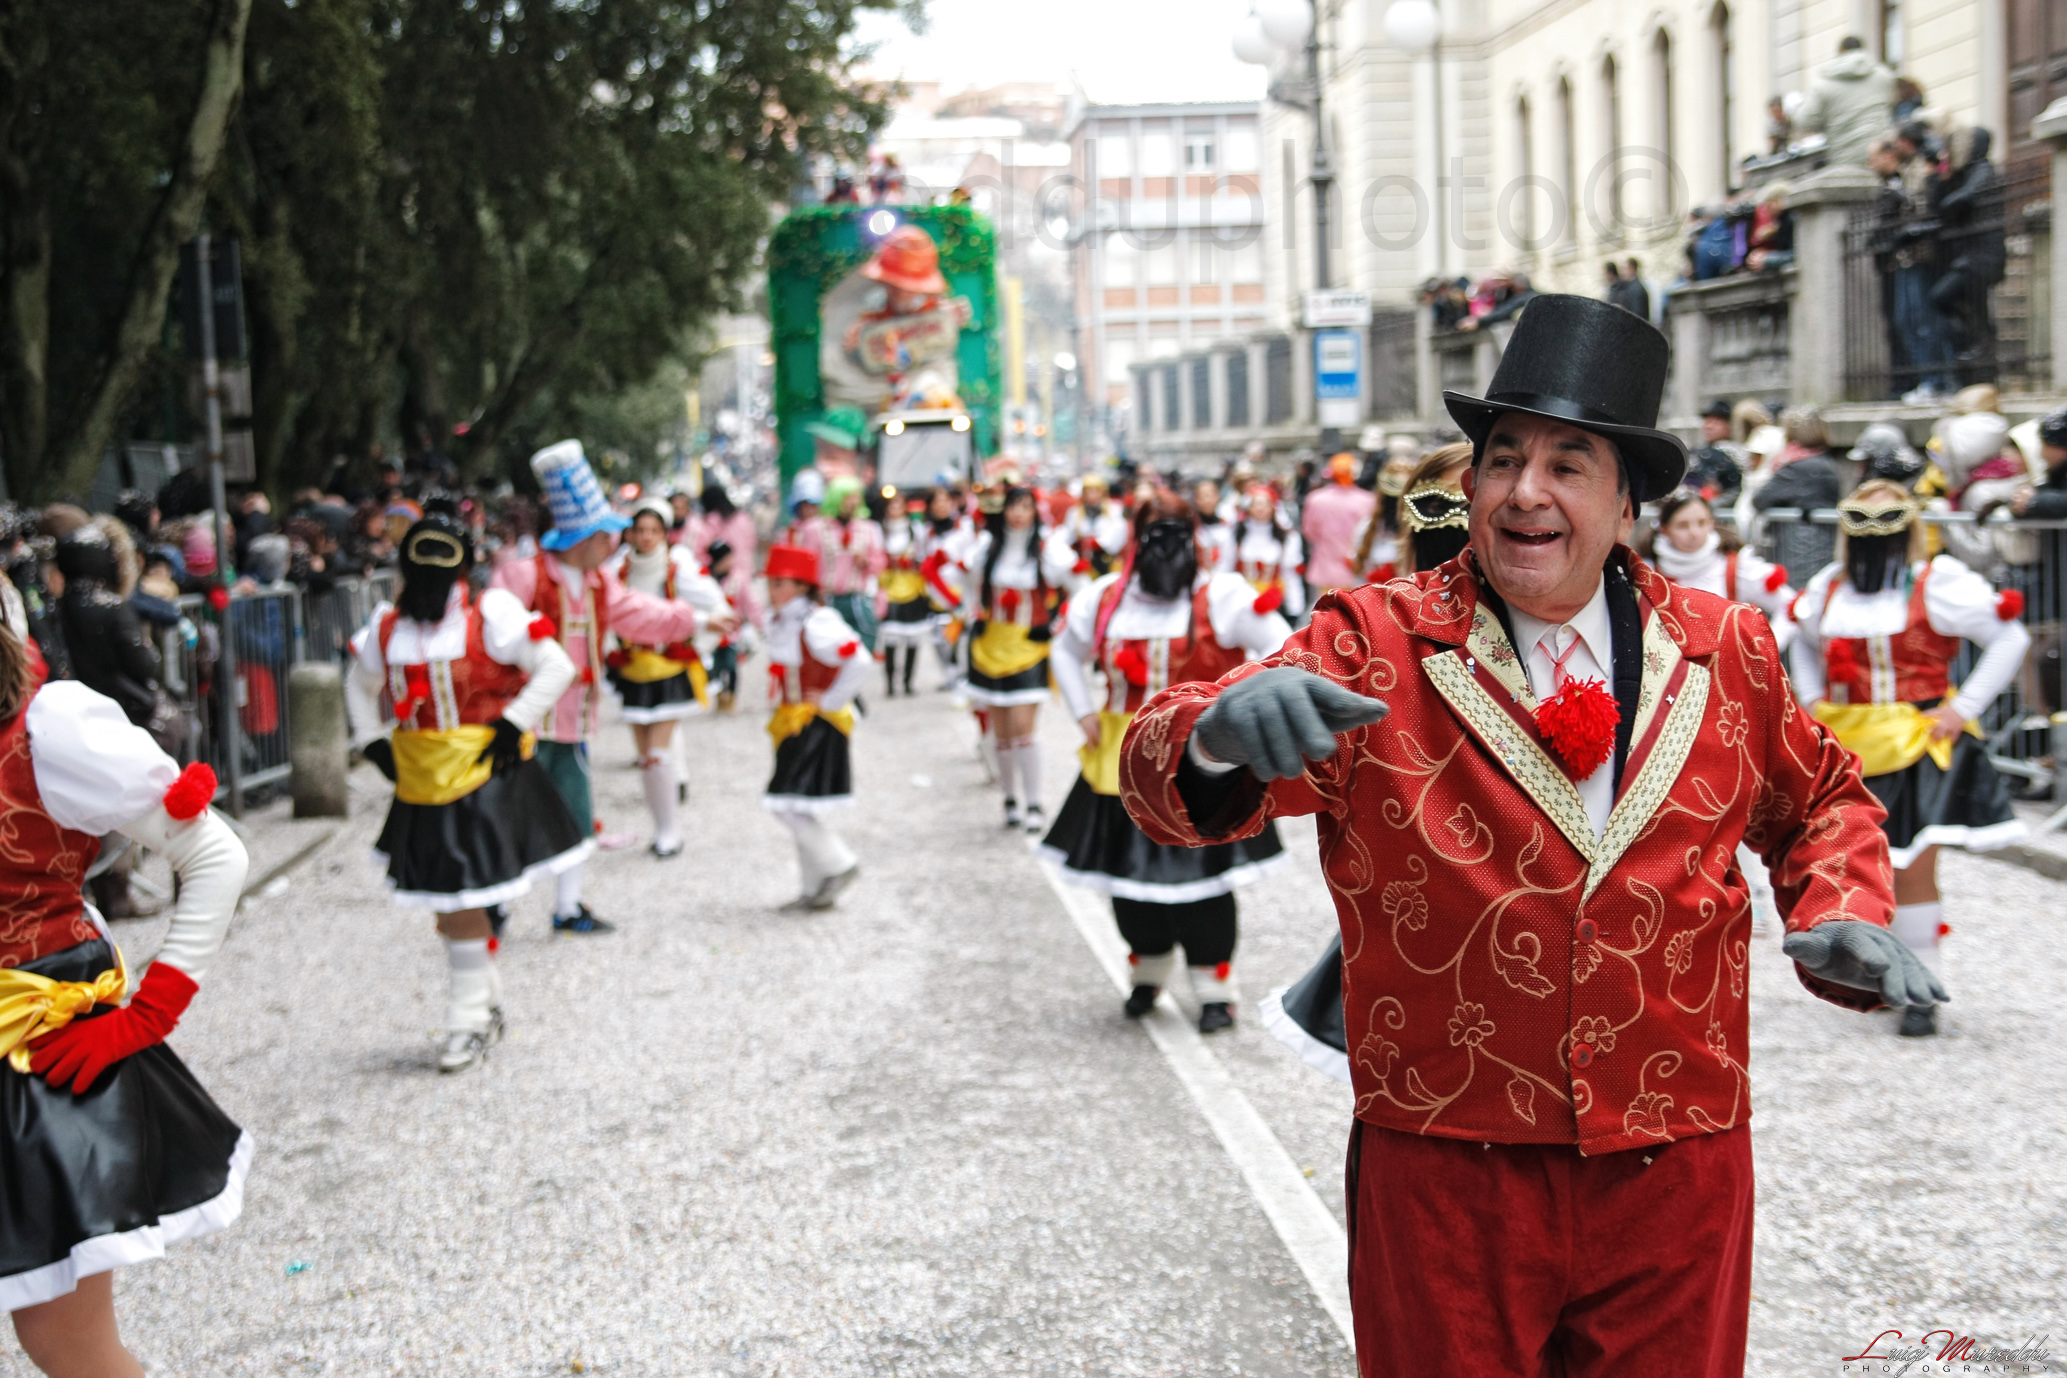 The Carnival In Tempio Pausania Town